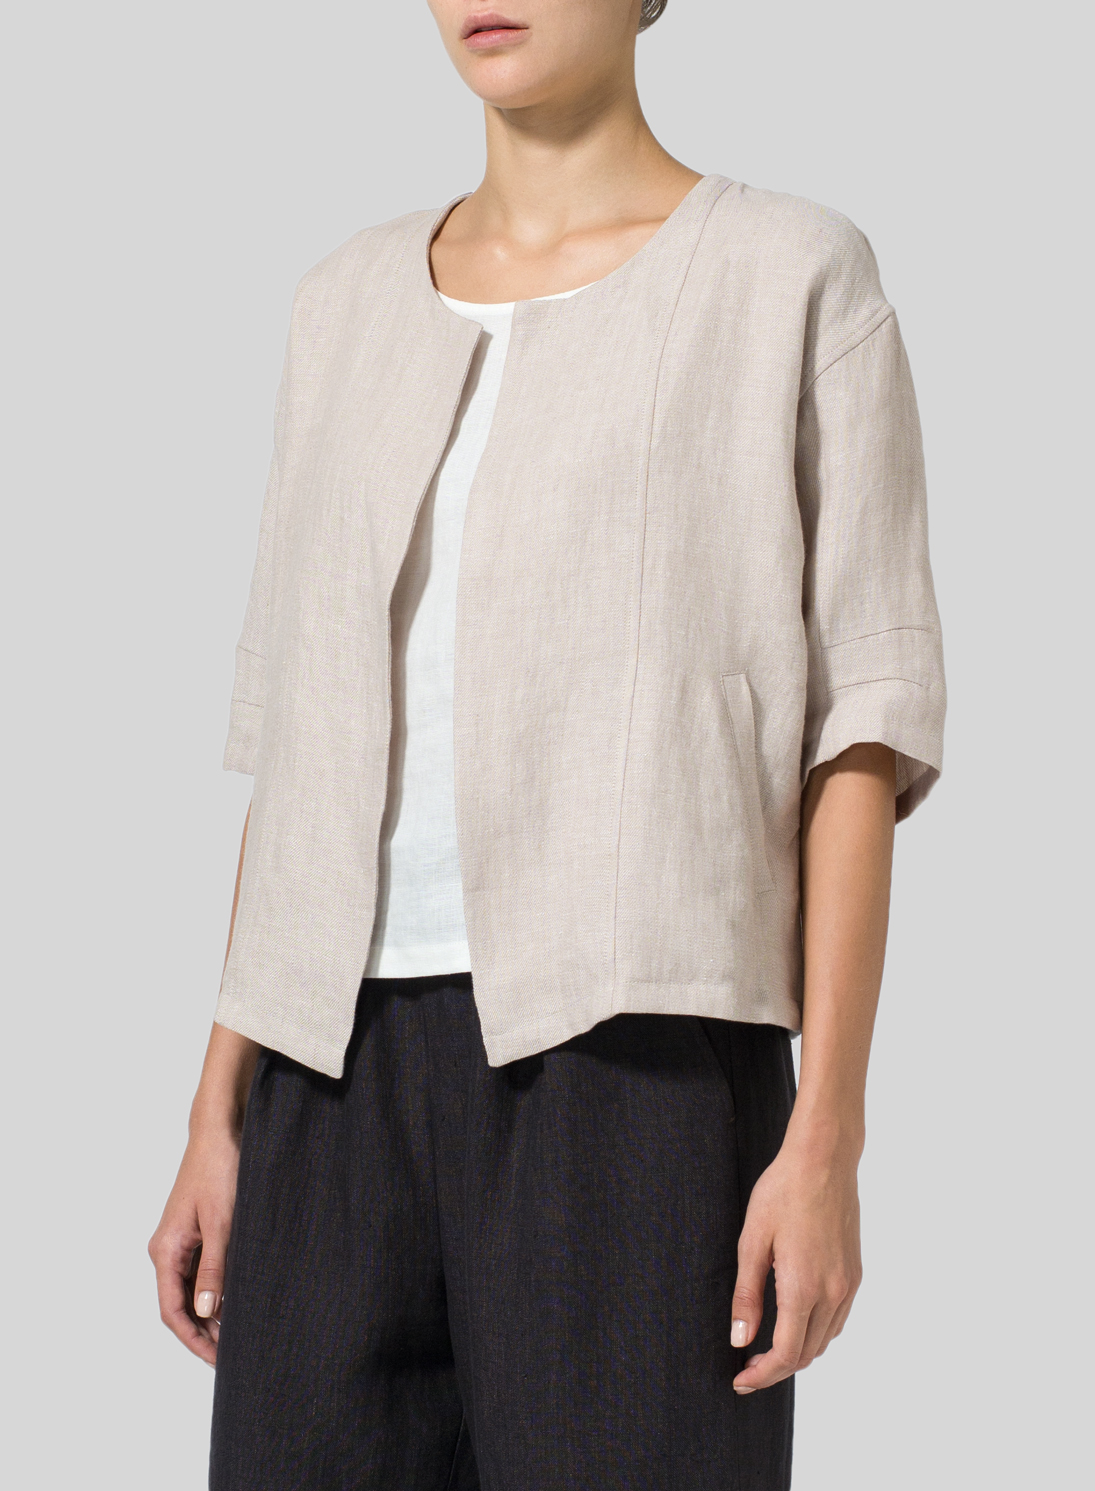 Twill Weave Linen Open Front Jacket - Plus Size